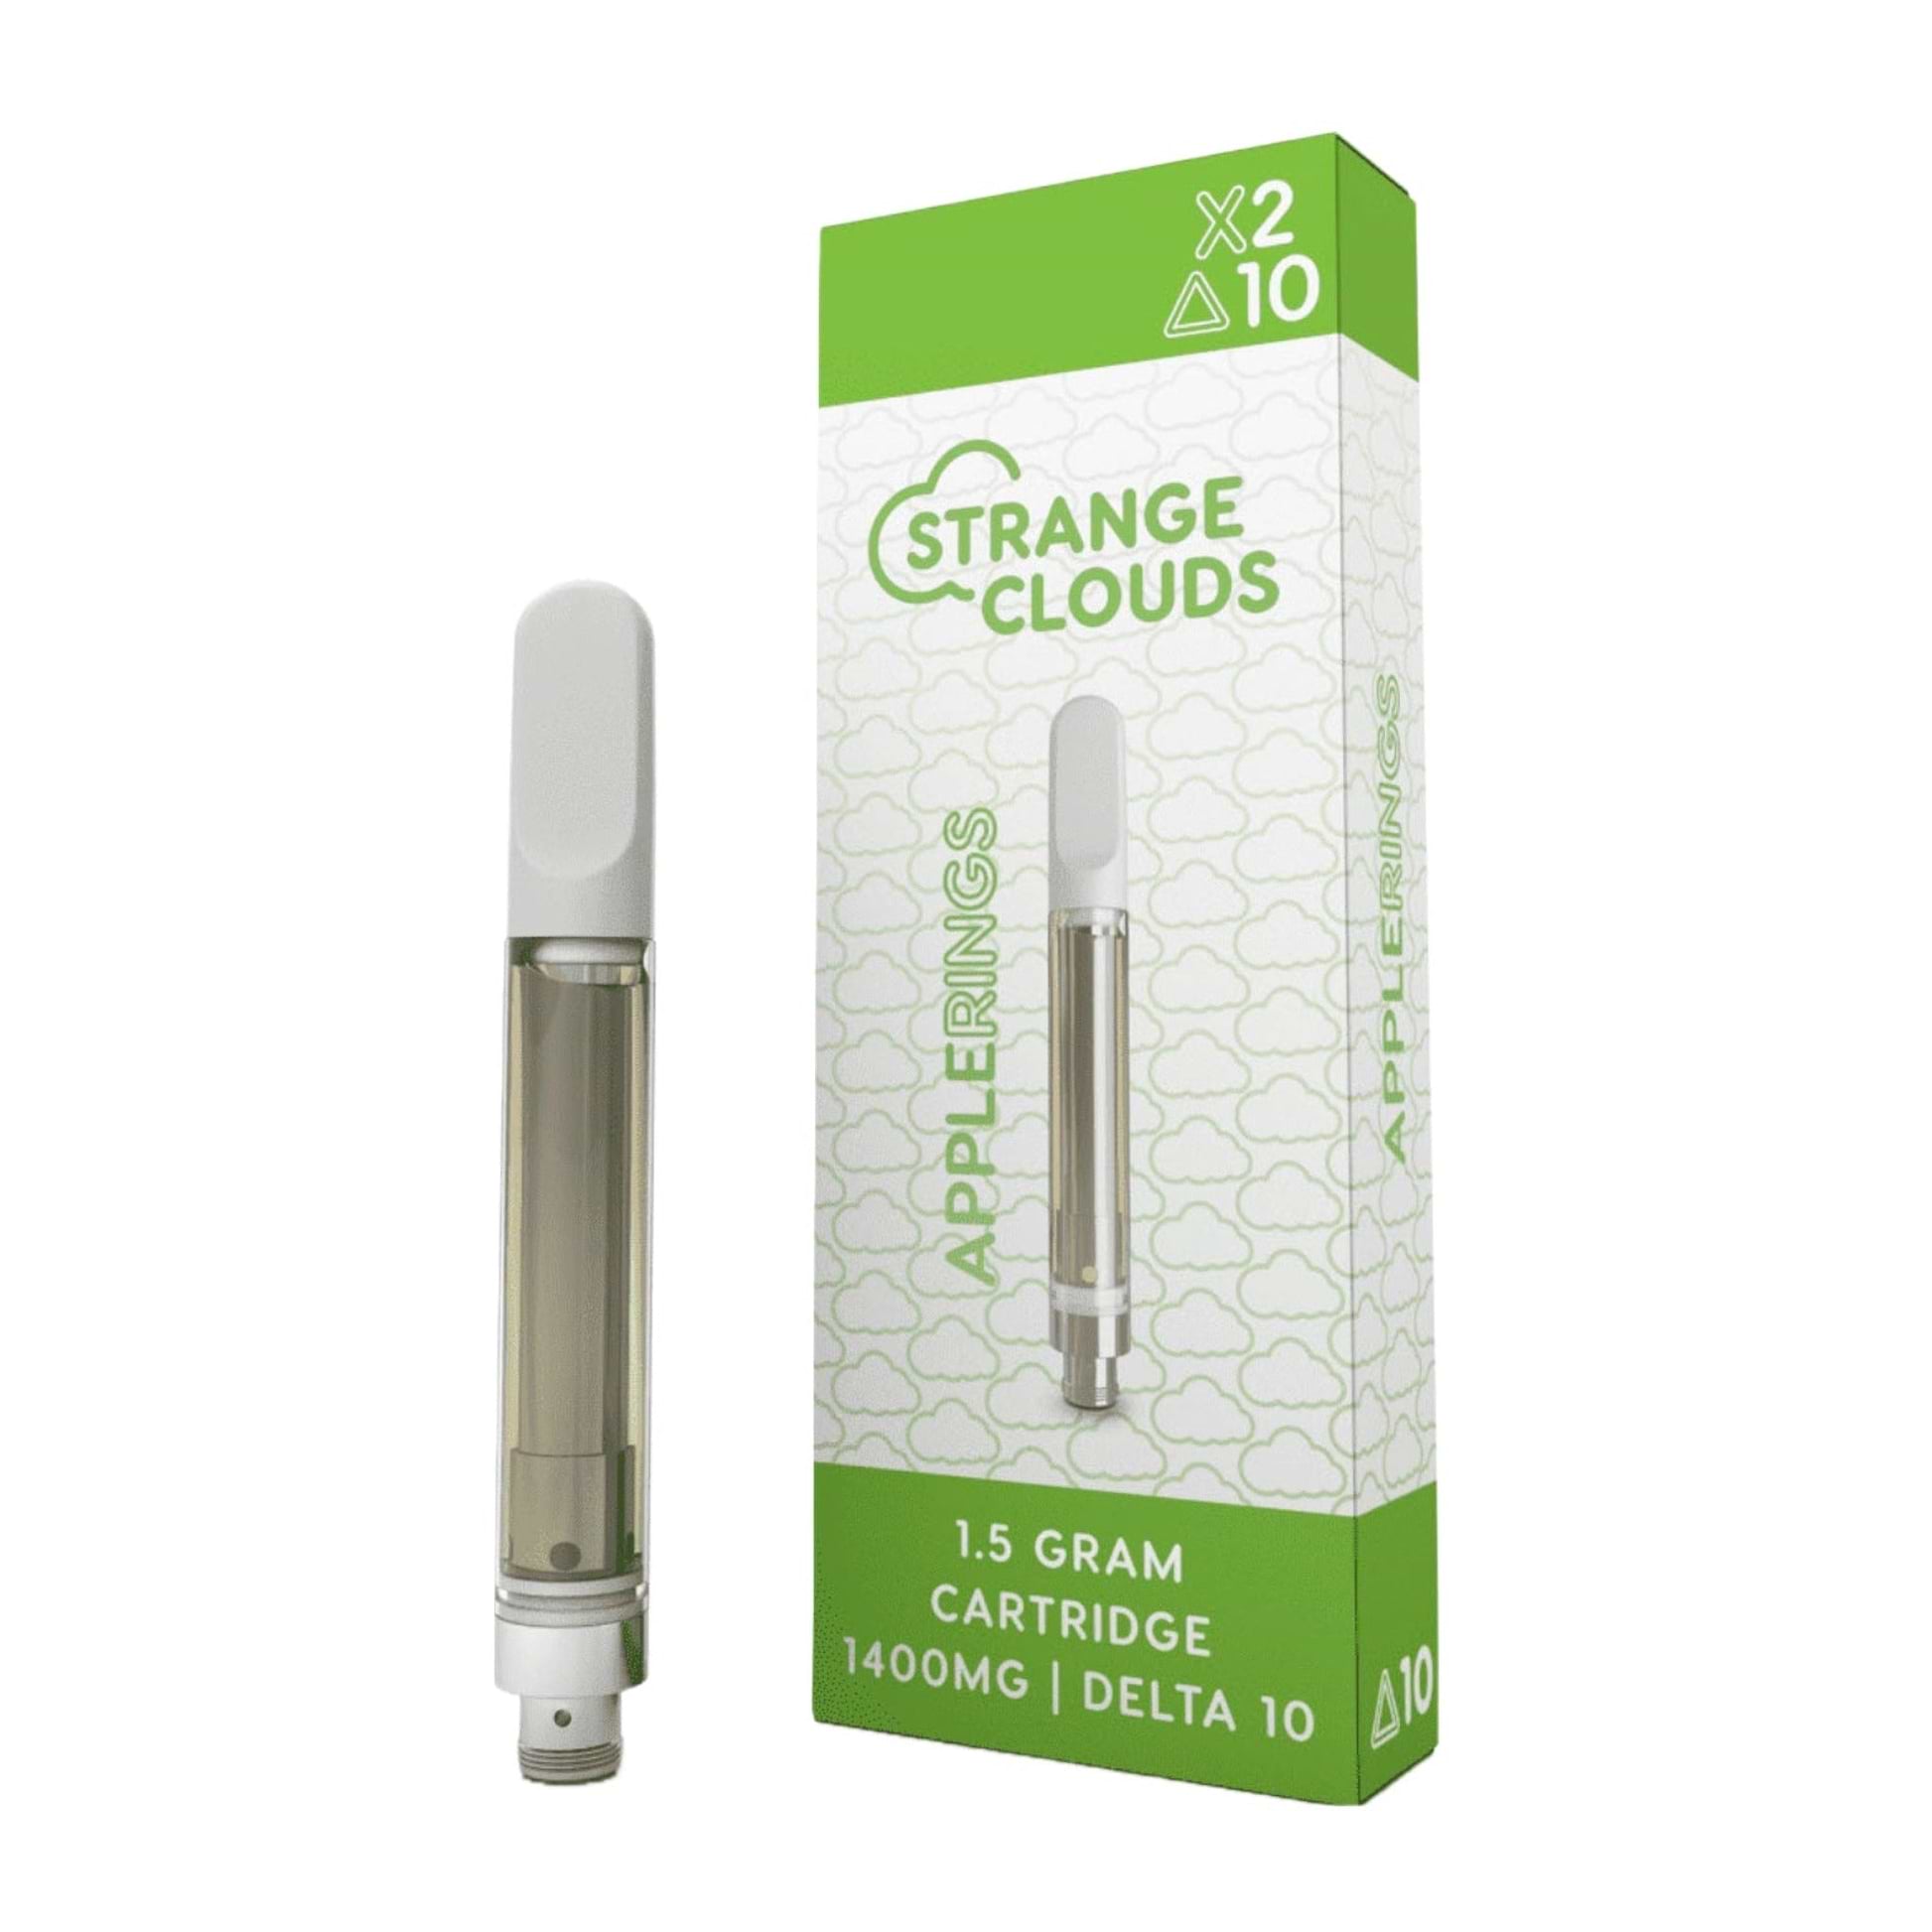 Strange Clouds Delta 10 Cartridge - 1400mg Apple Rings